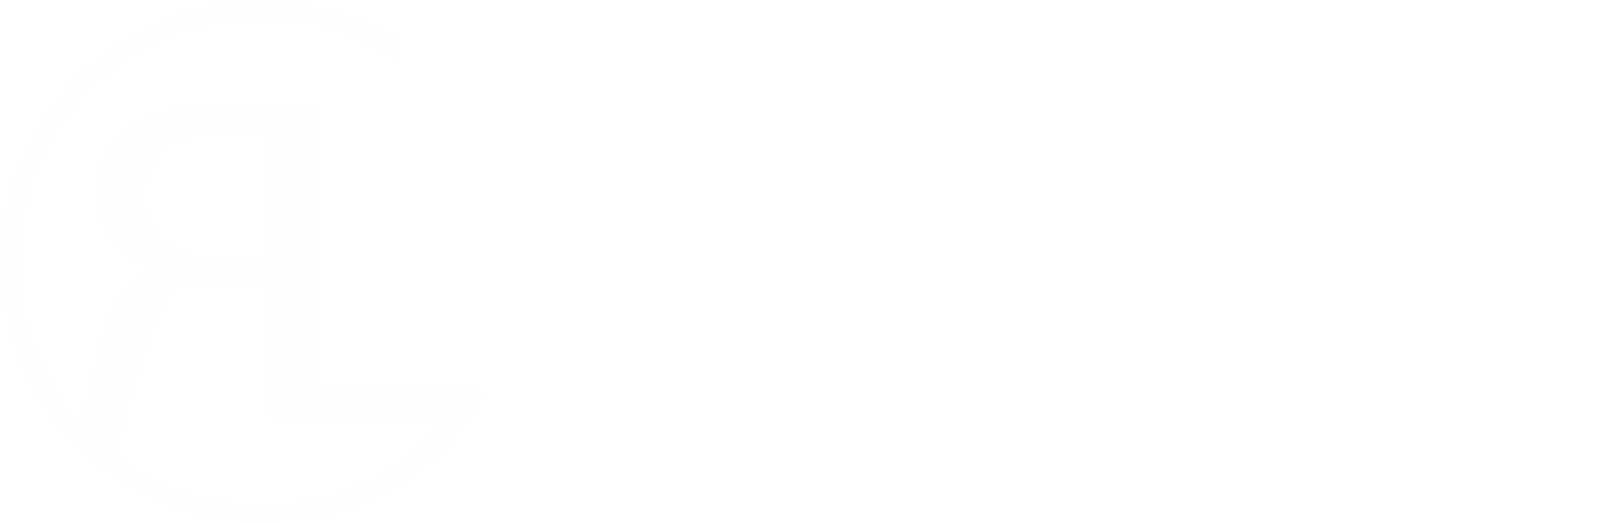 Renewed Life Logo with Words White